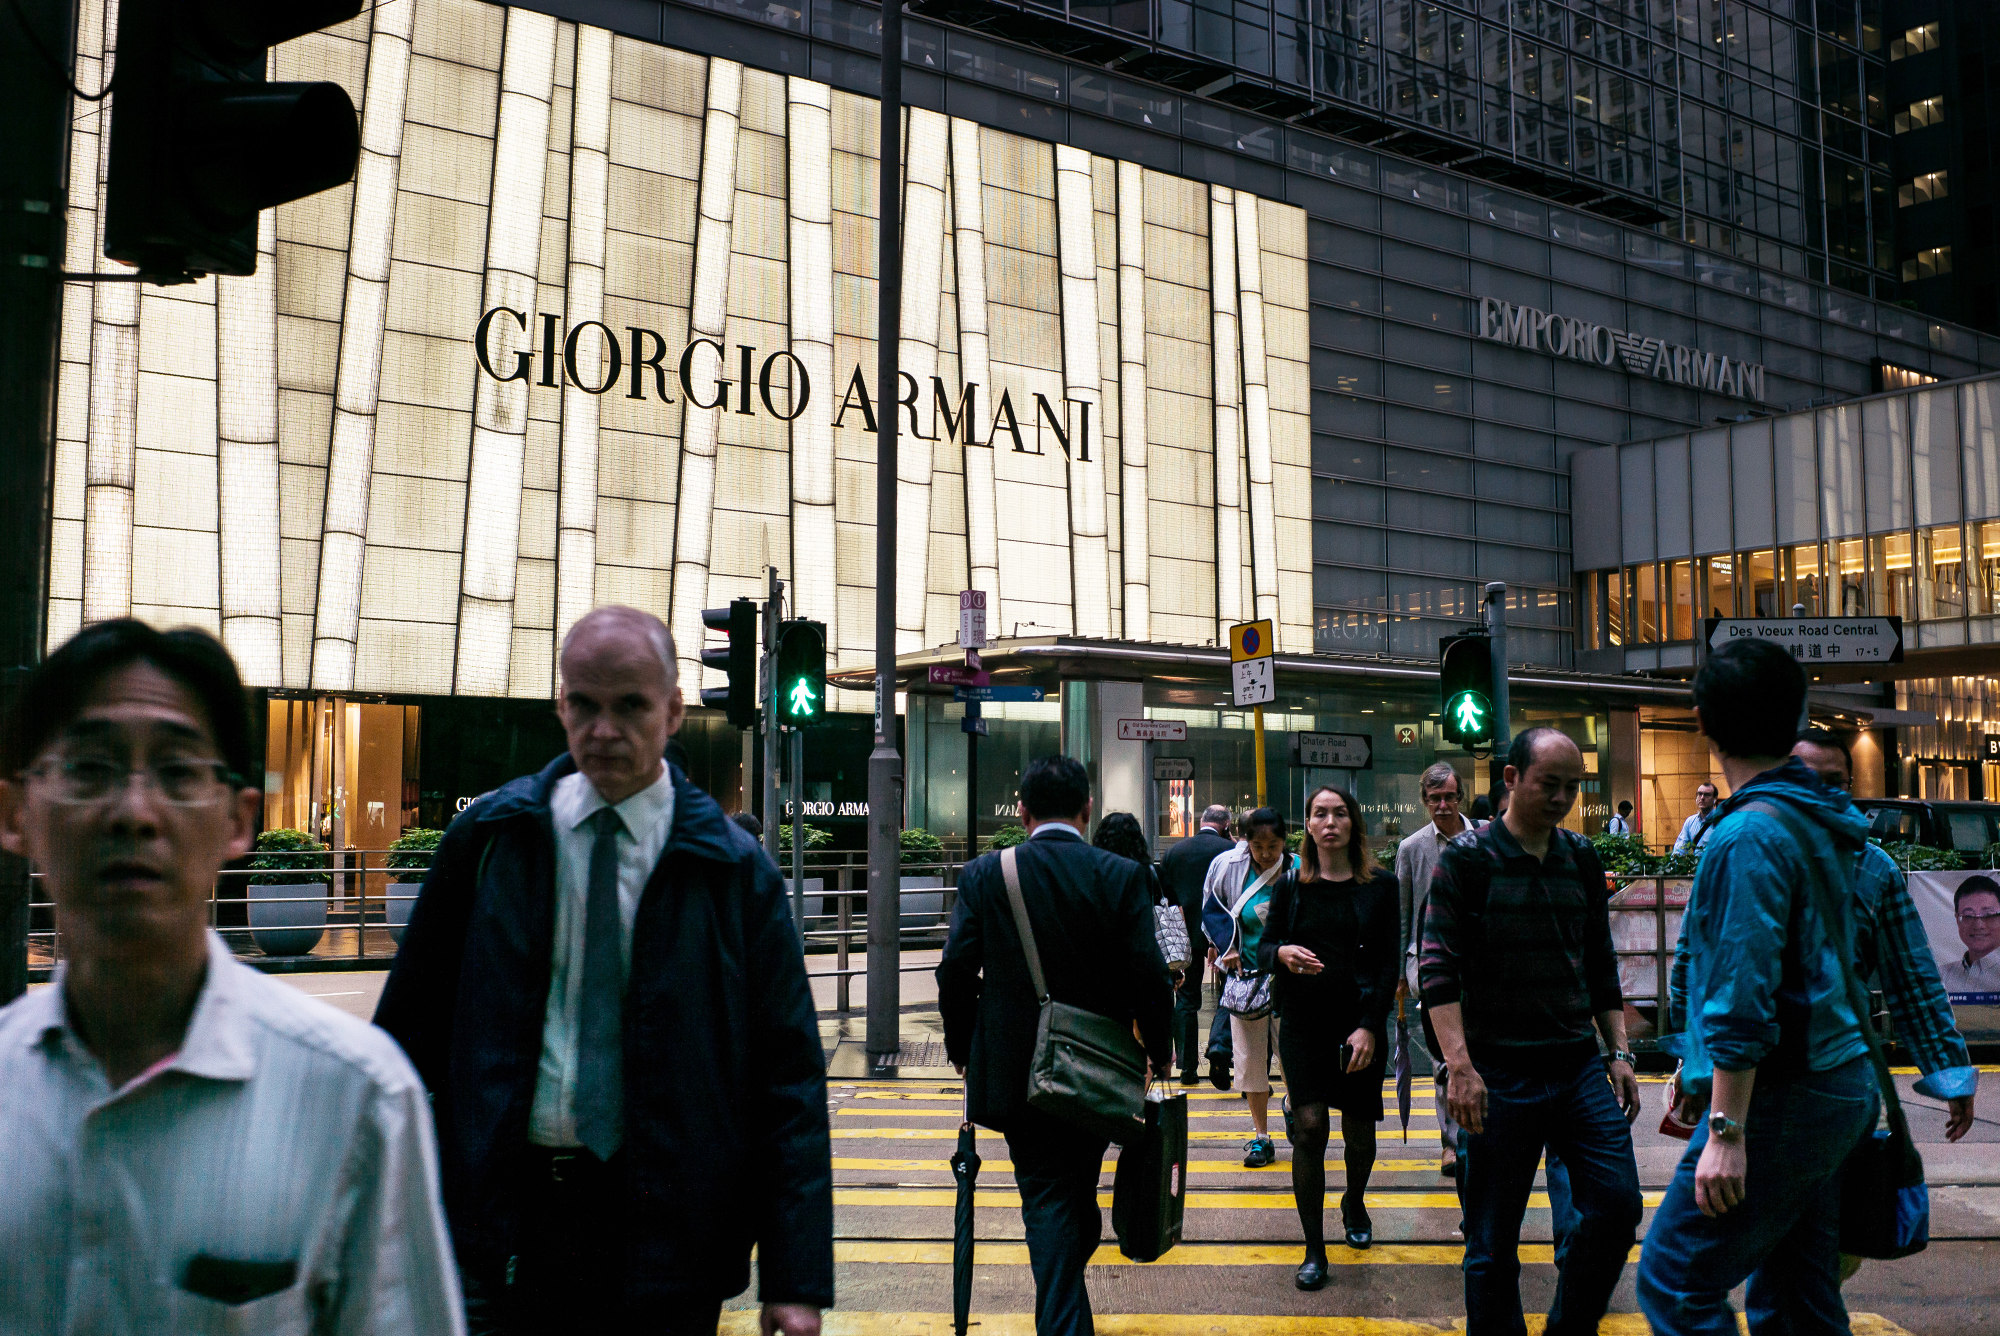 Founding History and Diverse Brand Portfolio of Armani